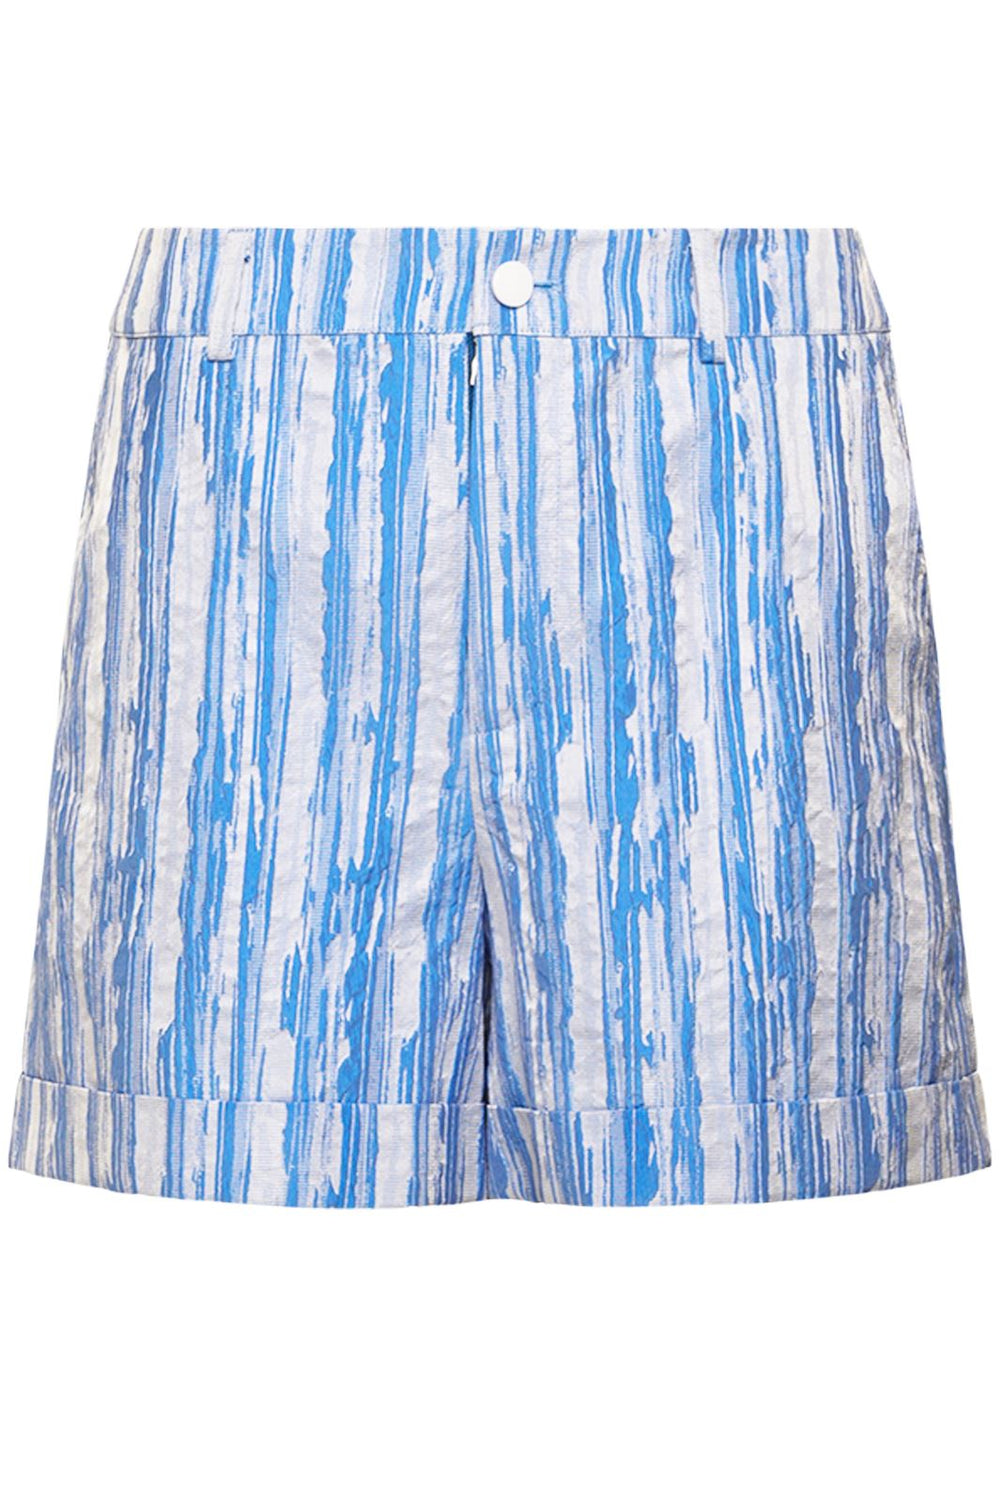 Noella - Julia Shorts - Blue Shorts 